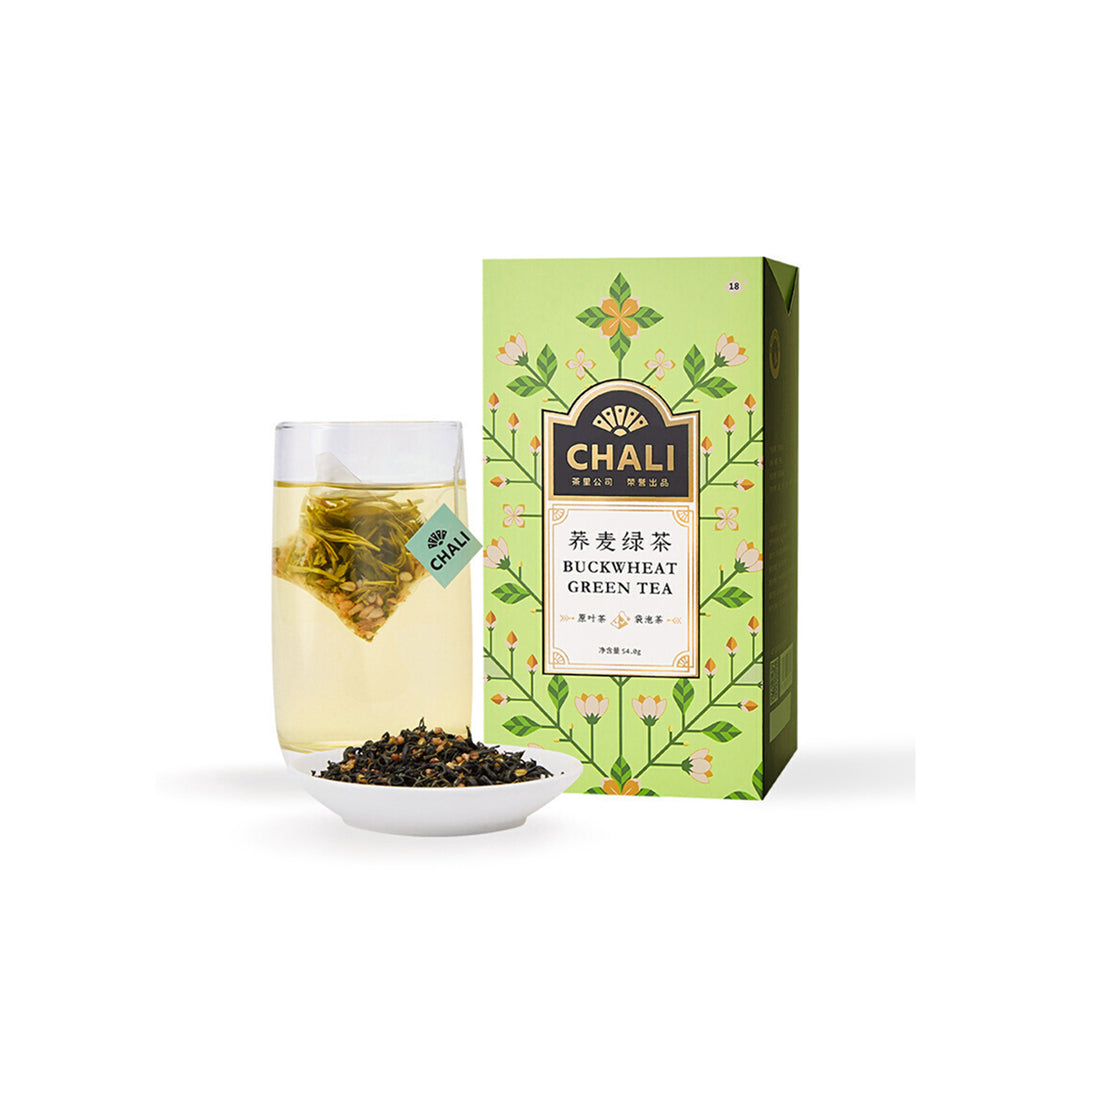 Buckwheat Green Tea 54g (18 Tea Bags)